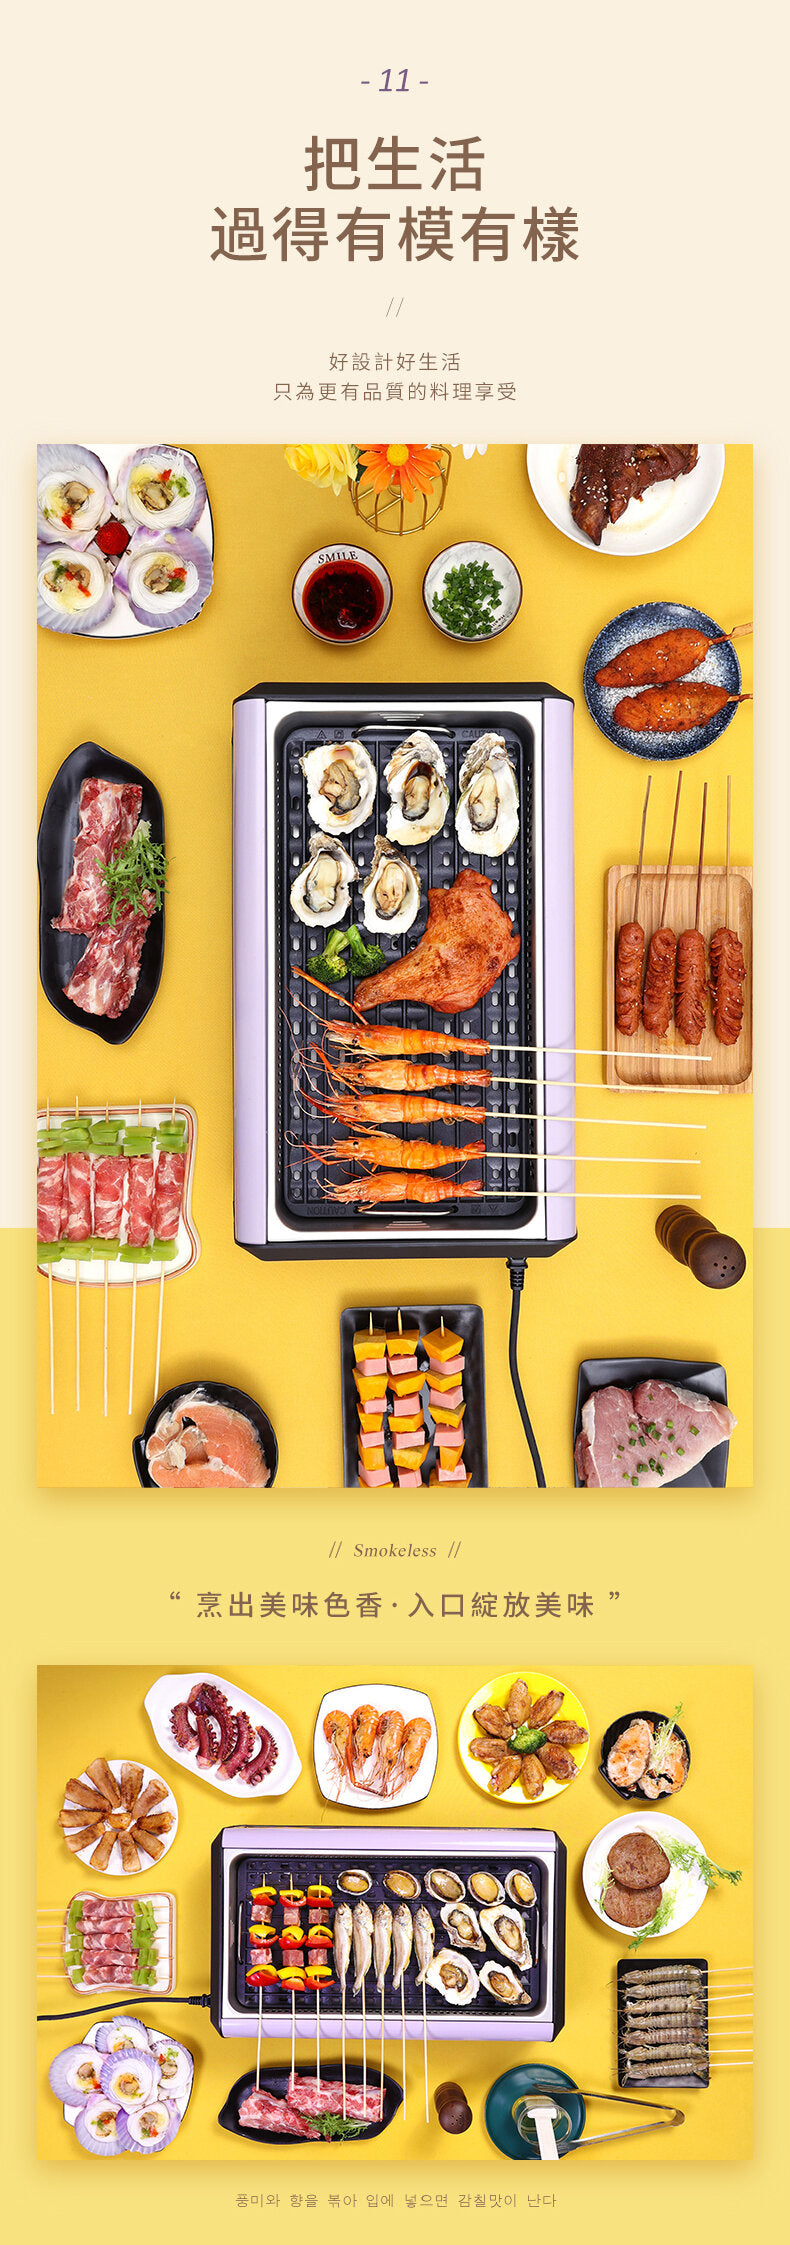 DAEWOO - South Korea Daewoo S19 Korean smokeless barbecue grill｜Electric grill pan｜Electric hot plate｜Fireless cooking｜No oil smoke